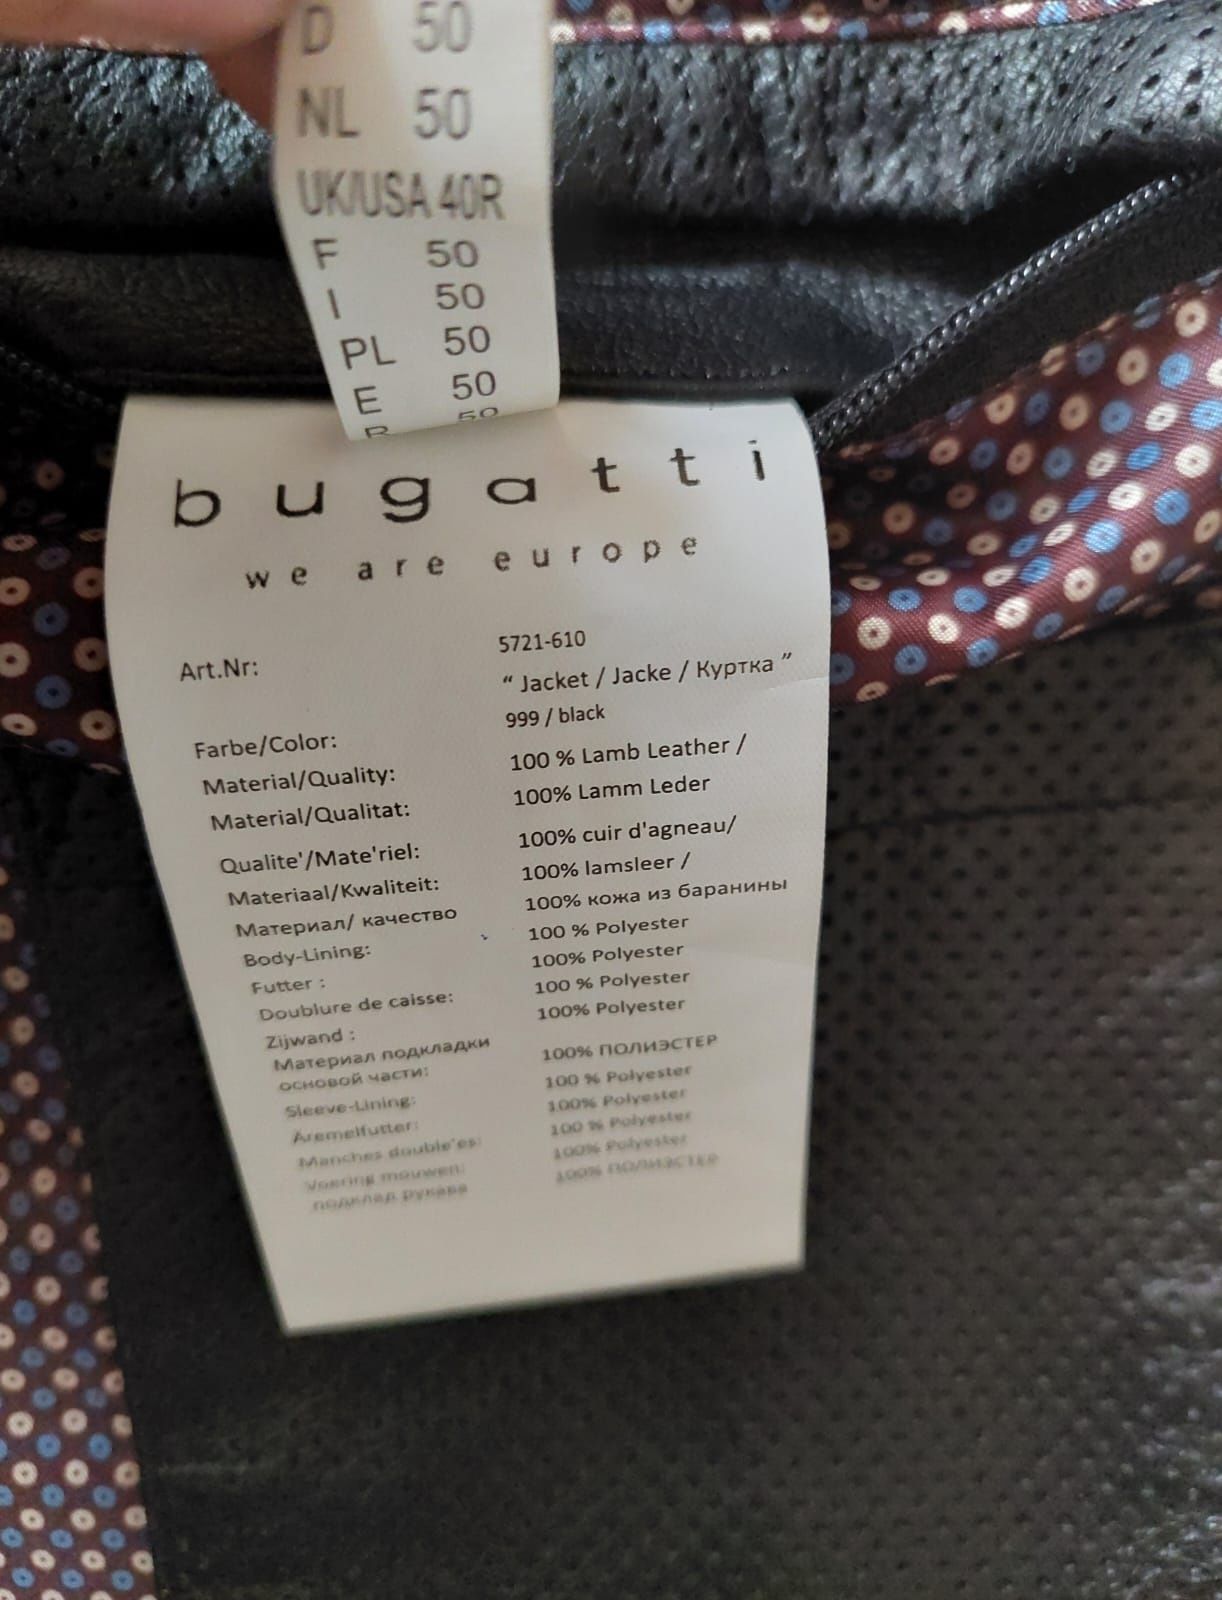 Bugatti nowa męska kurtka skórzana r50